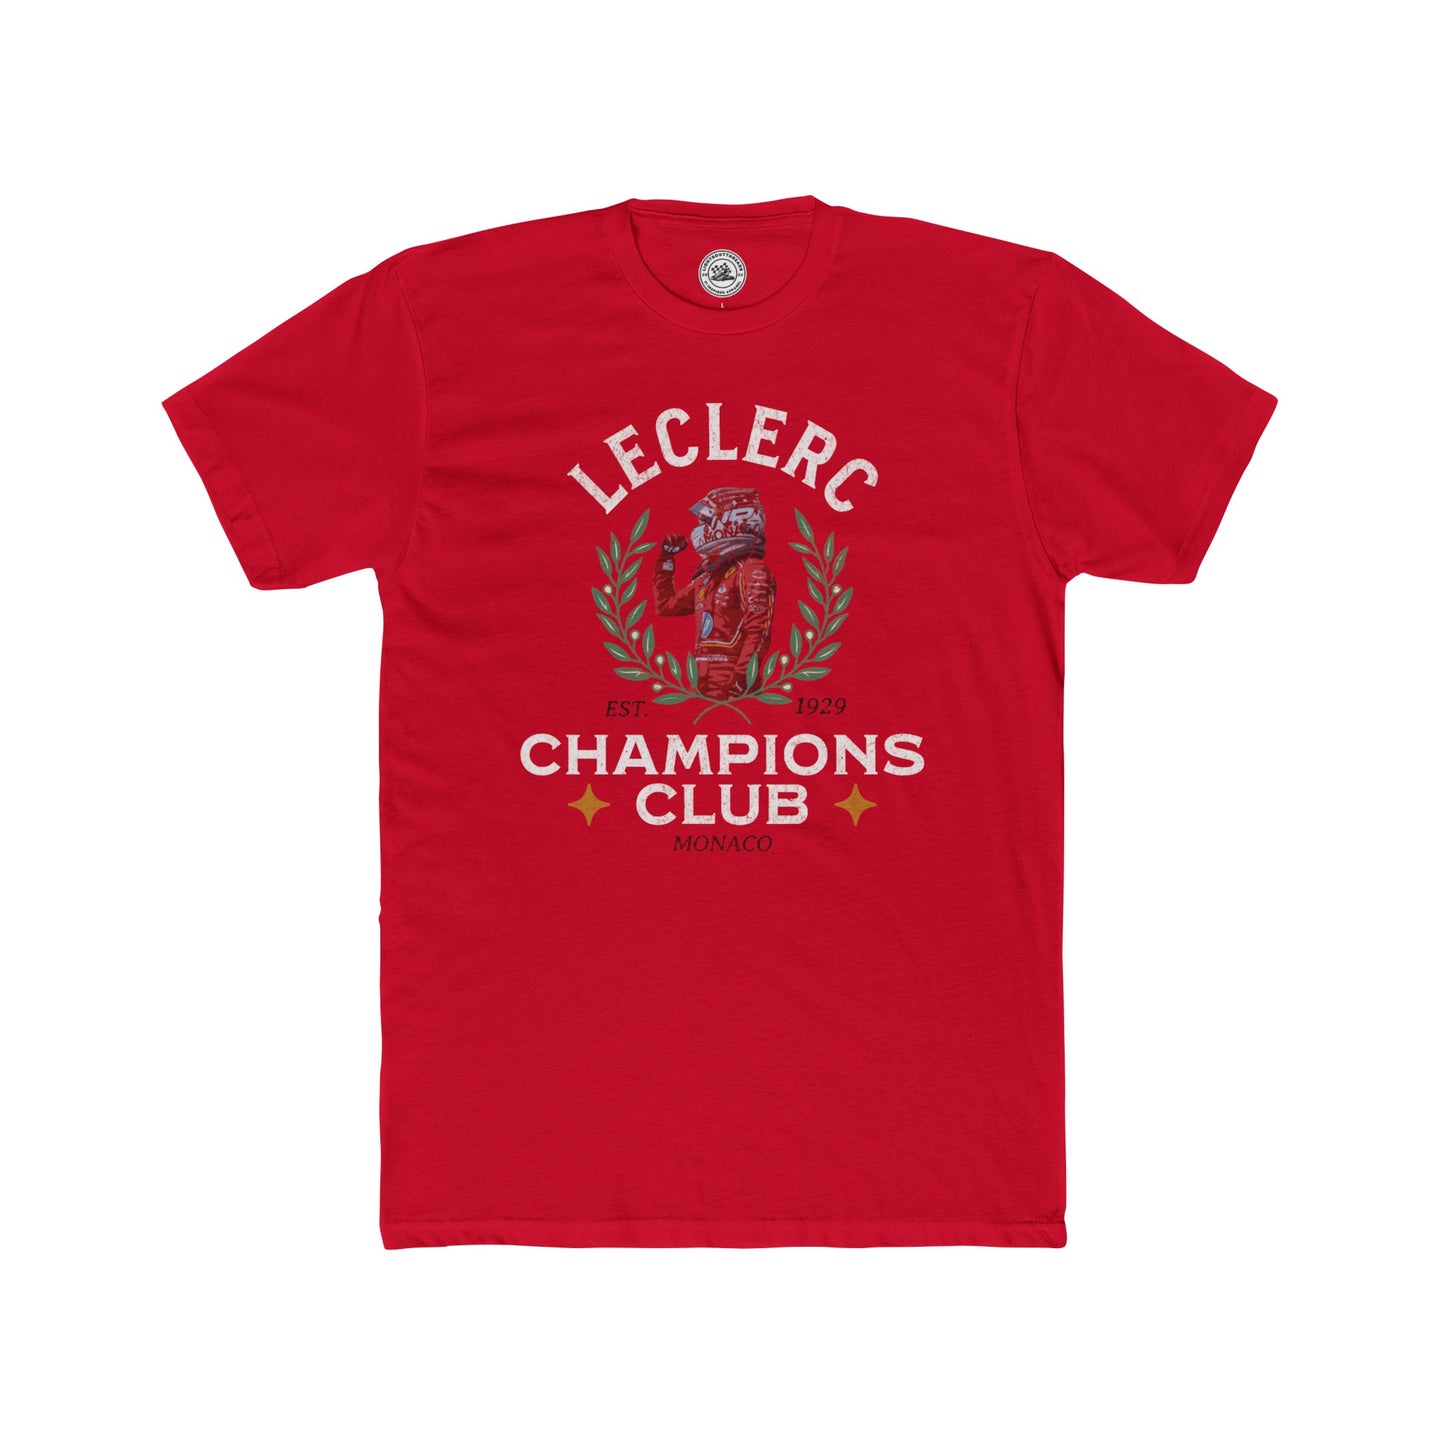 Charles Leclerc "Champions Club" Unisex Tee